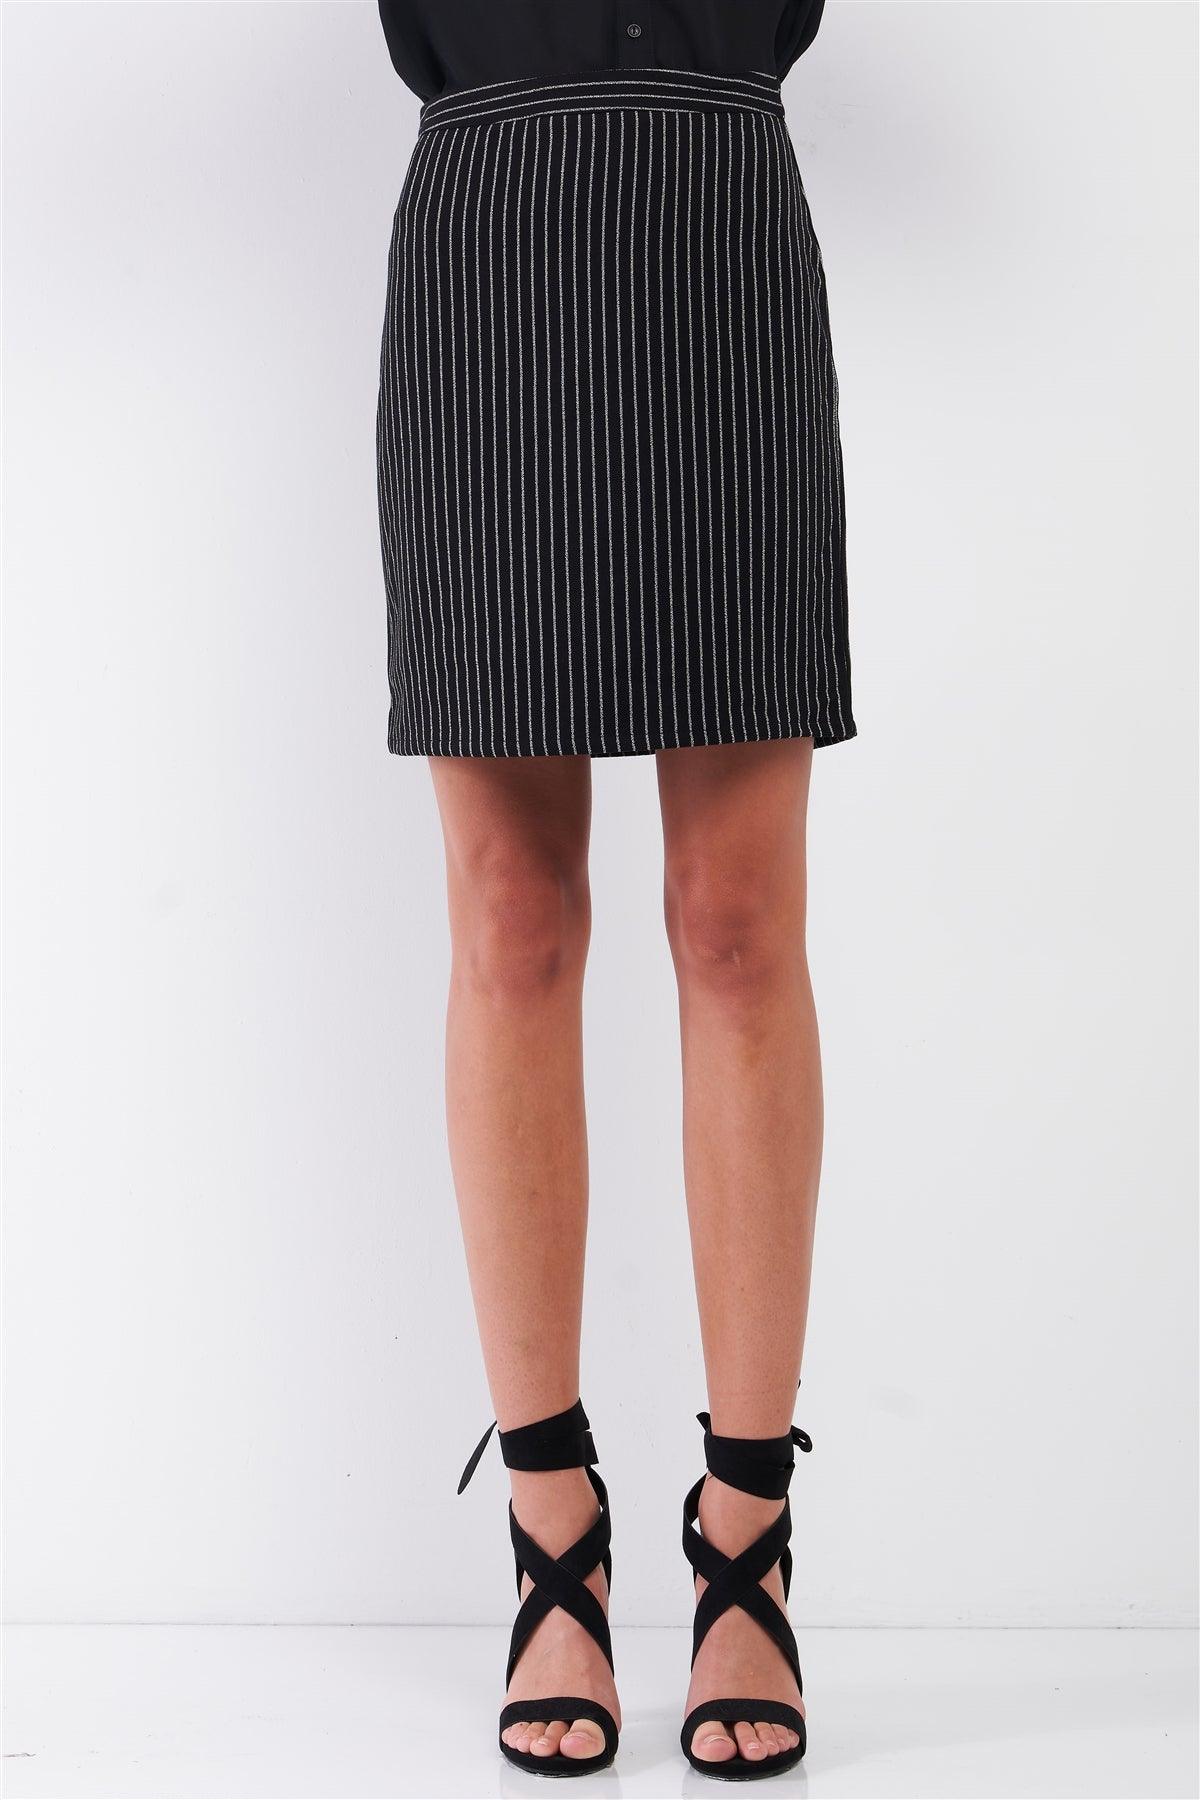 Black & White Striped High-Waisted Pencil Mini Skirt /1-2-2-1